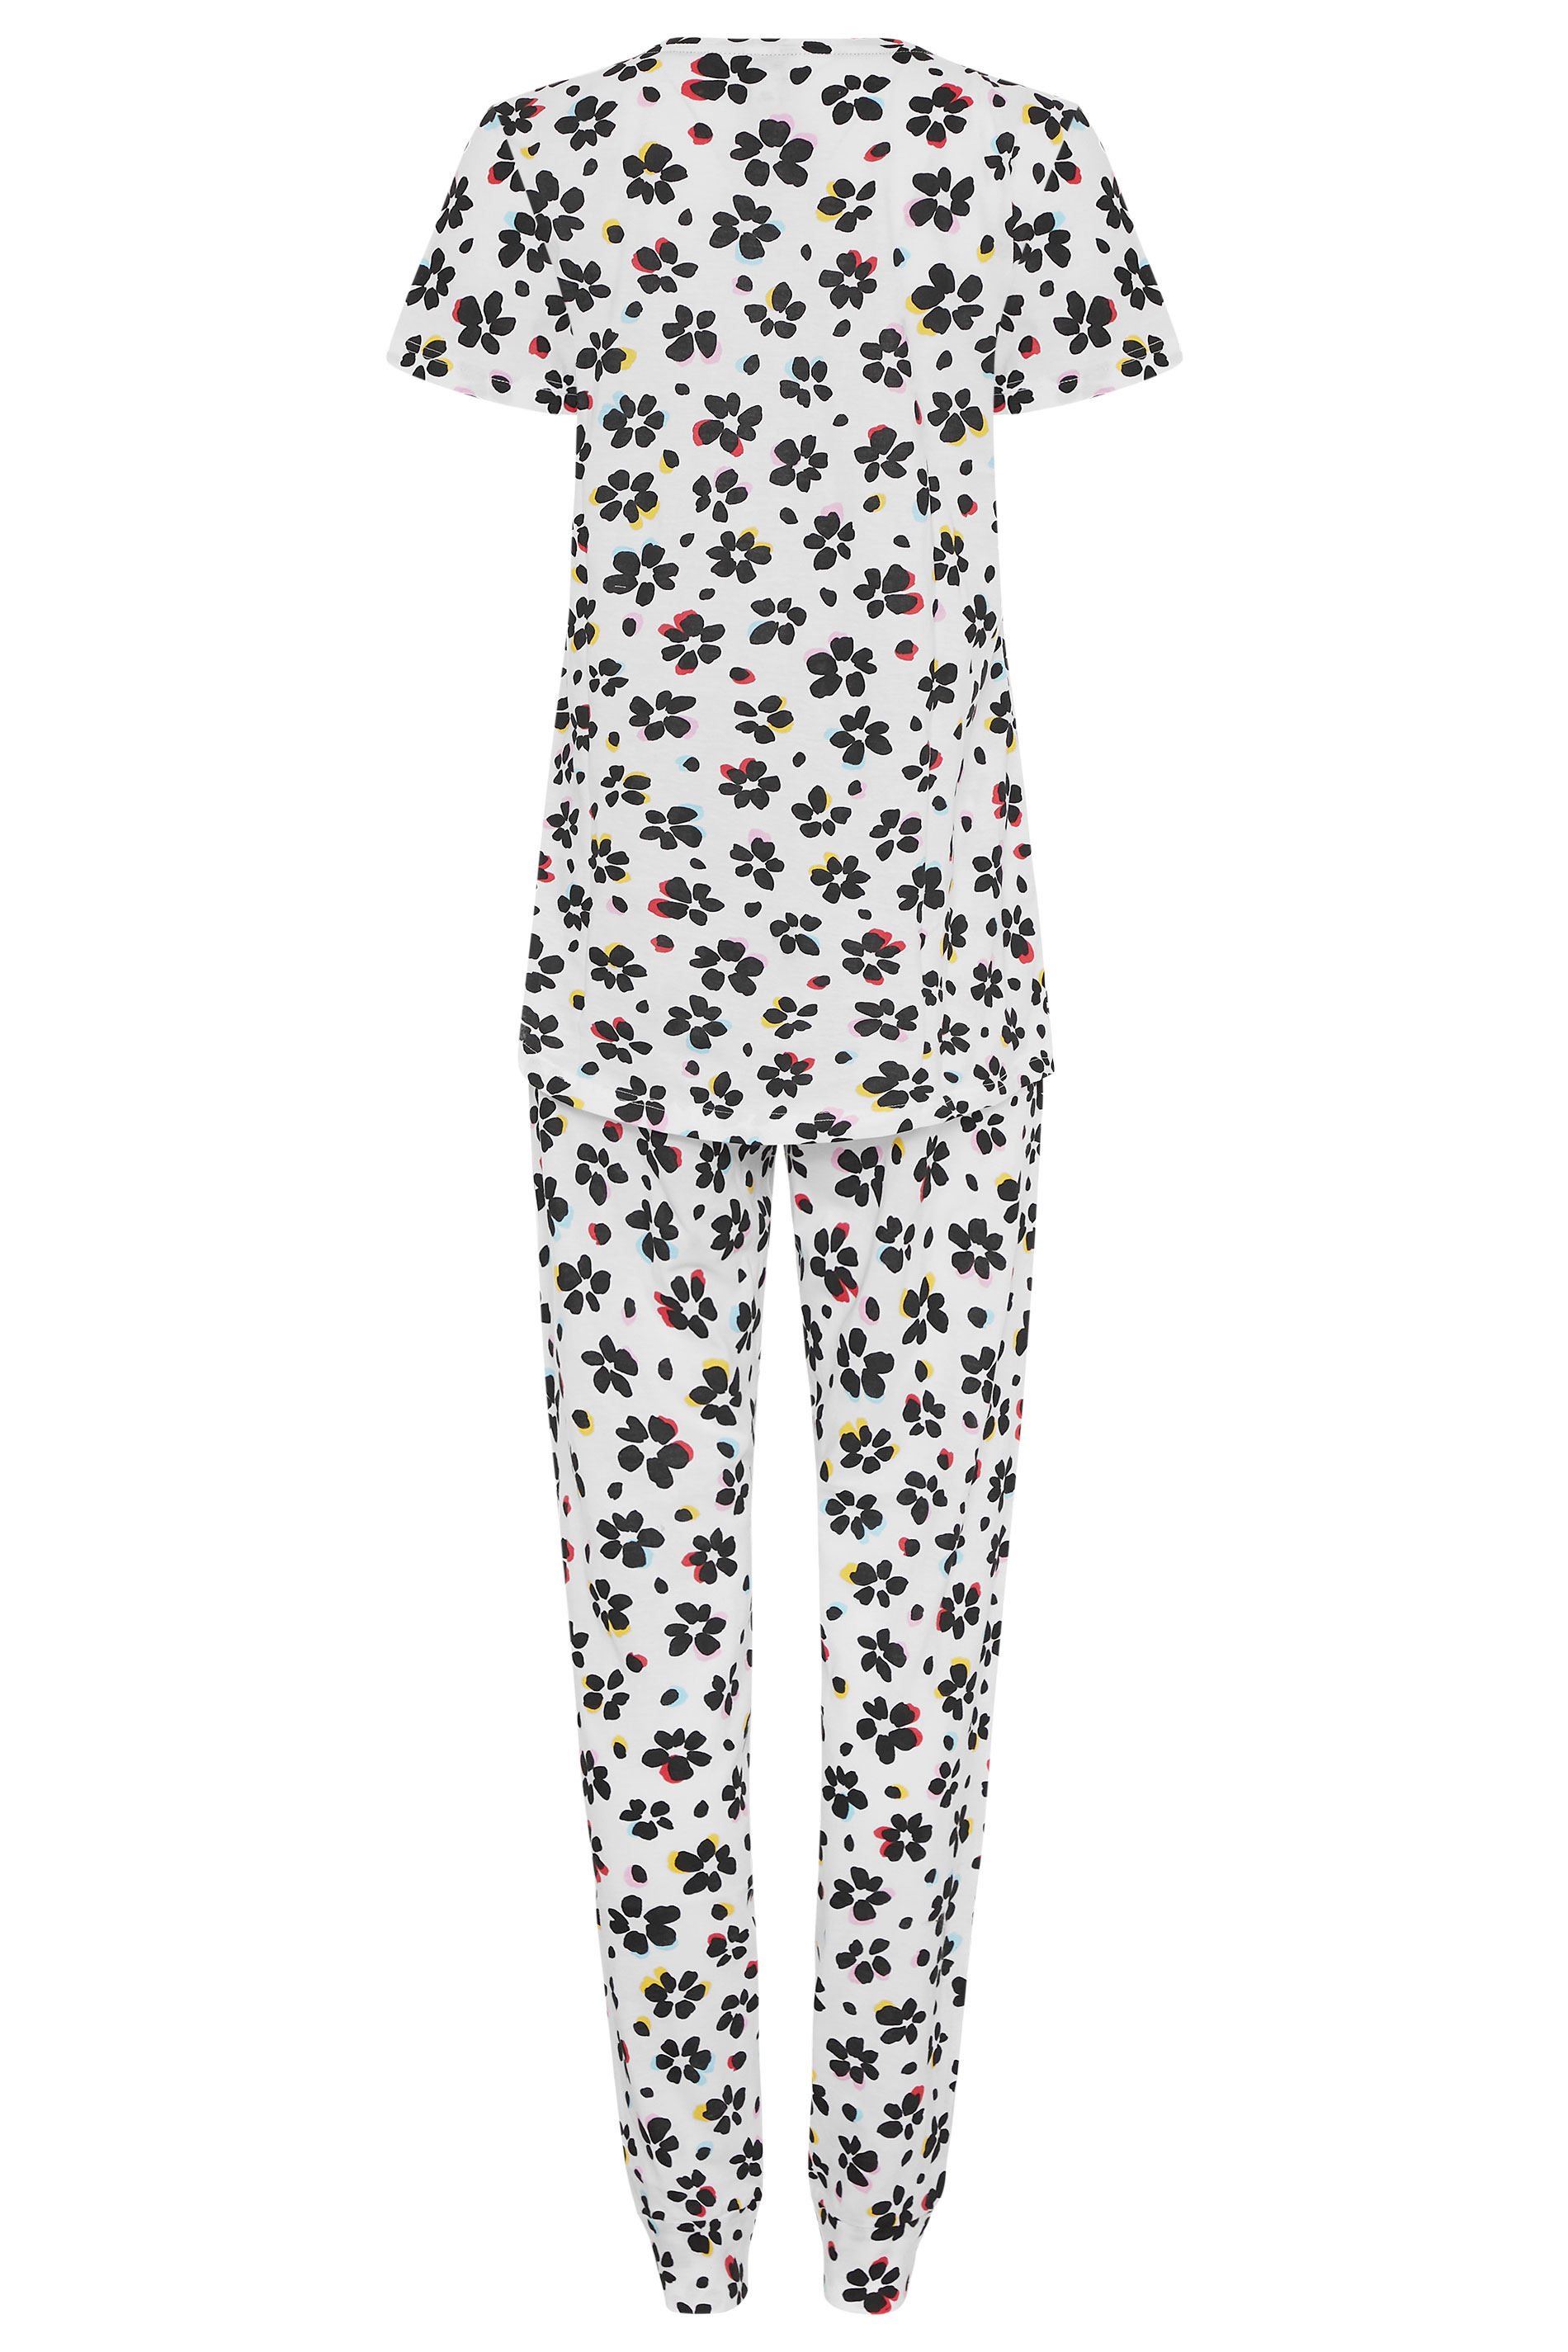 LTS White Floral Pyjama Set | Long Tall Sally